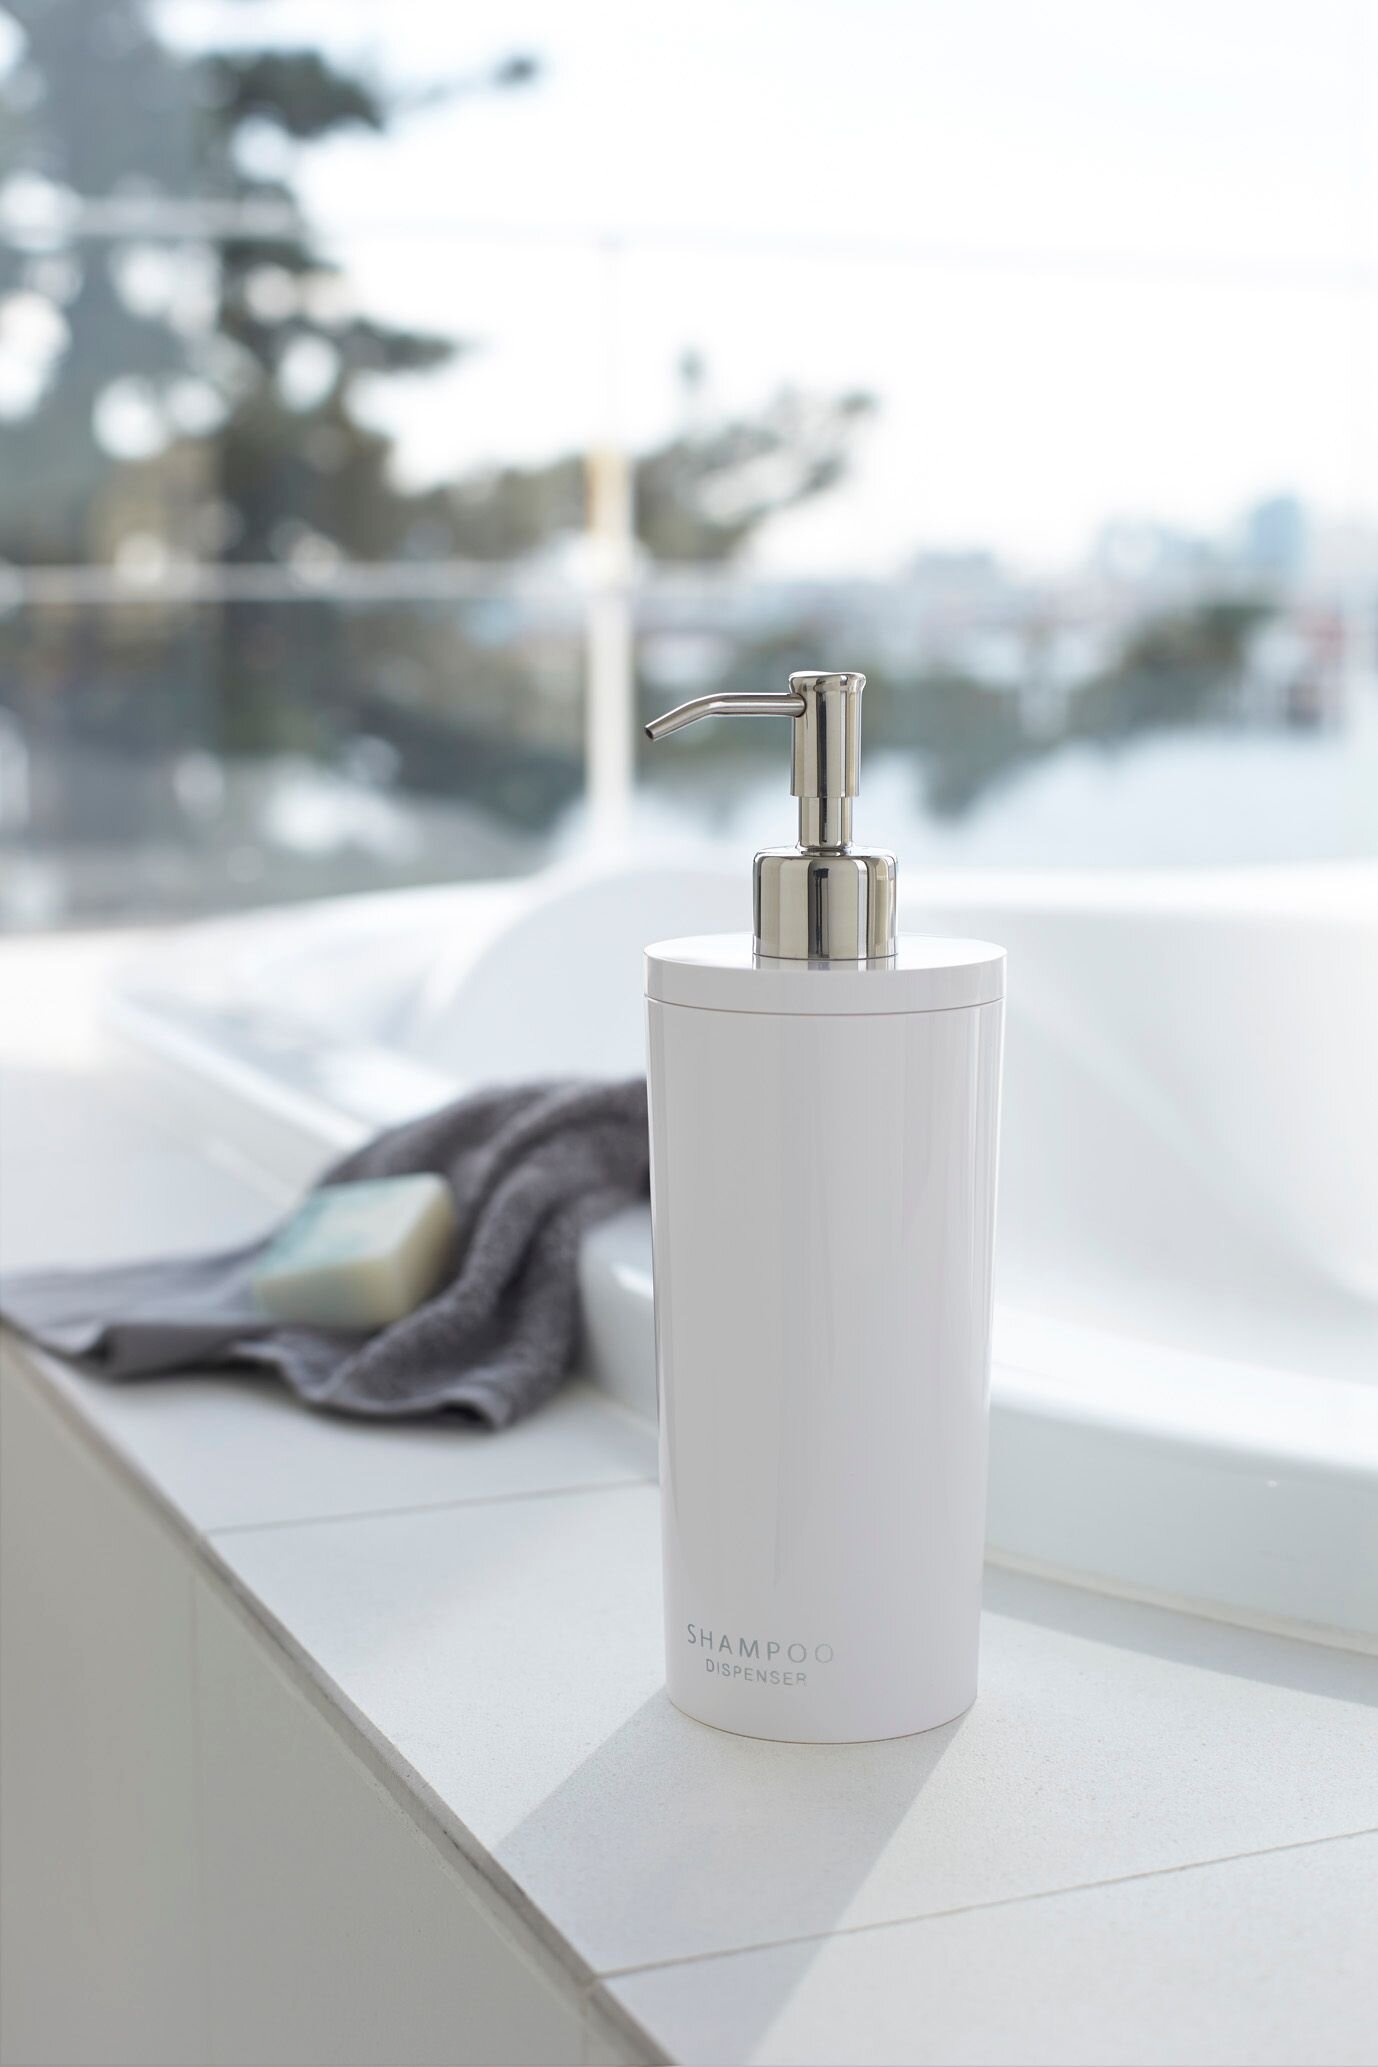 Yamazaki two-way dispenser mist Square Body Soap white 7896 F/S w/Tracking# NEW 